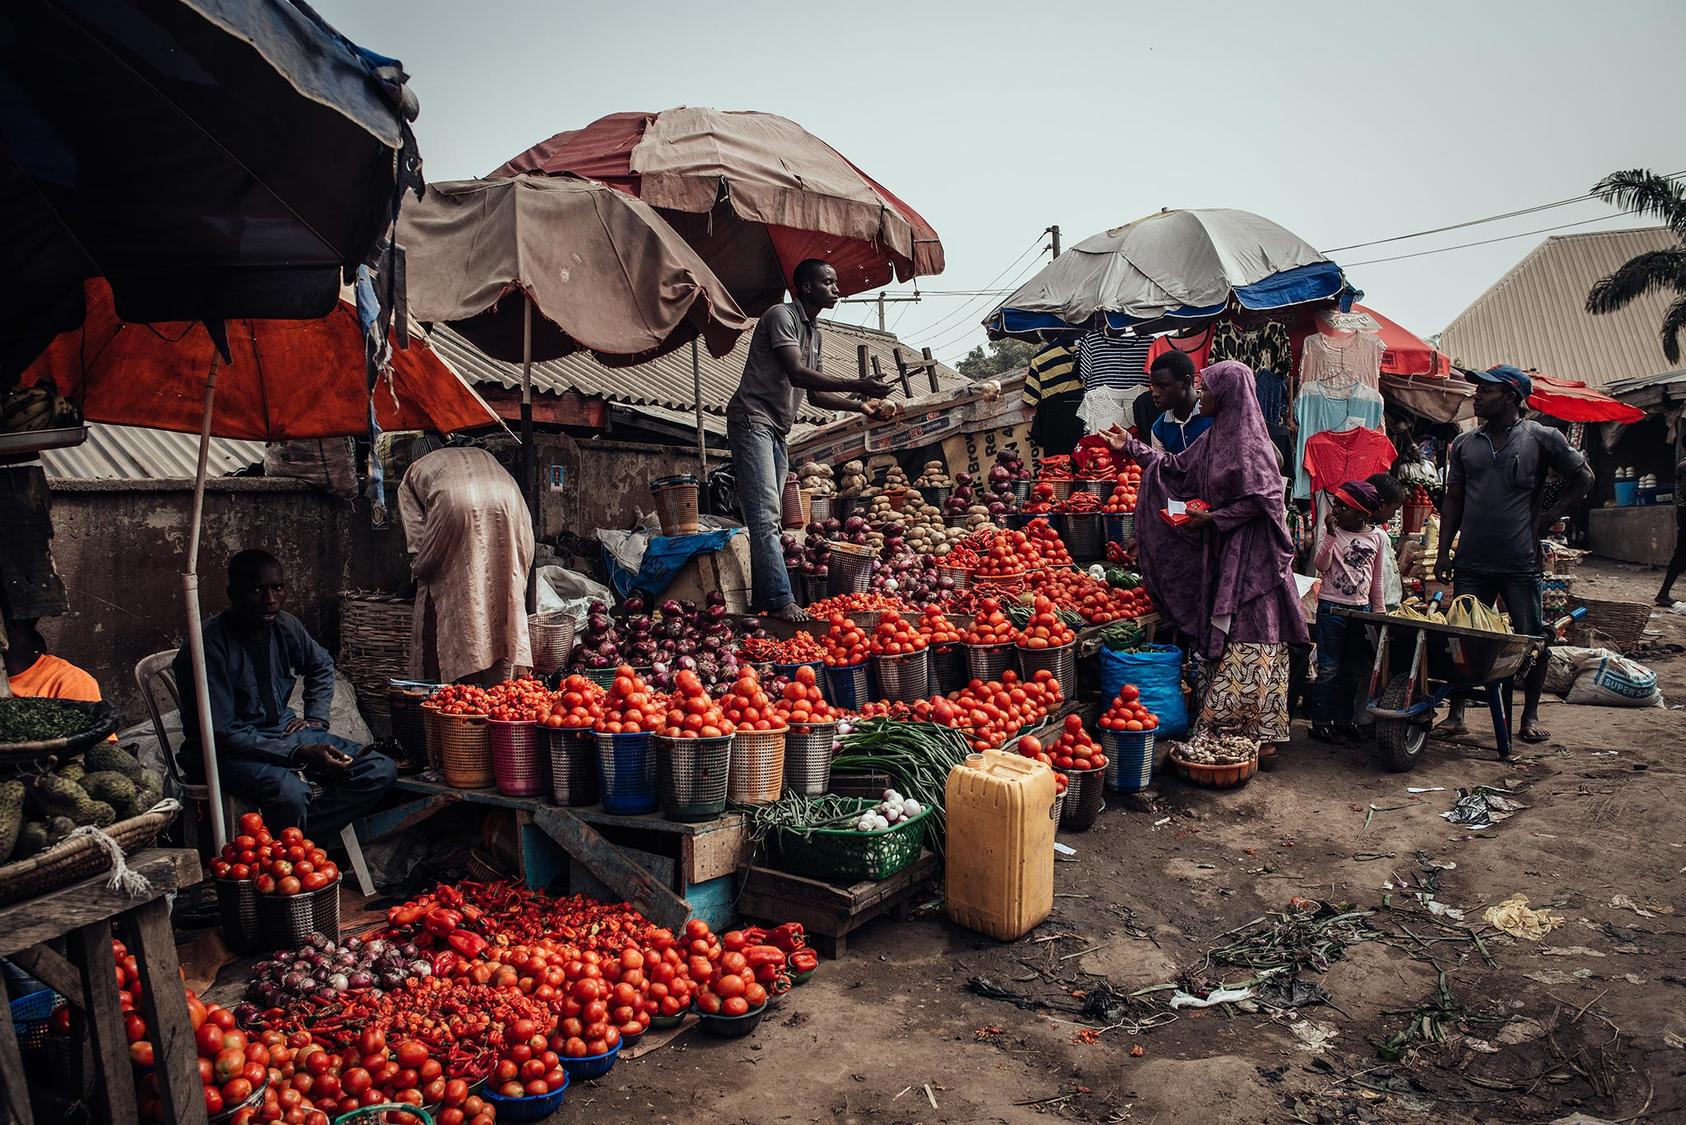 Kado Market, Abuja Nigeria, Feb. 13, 2019